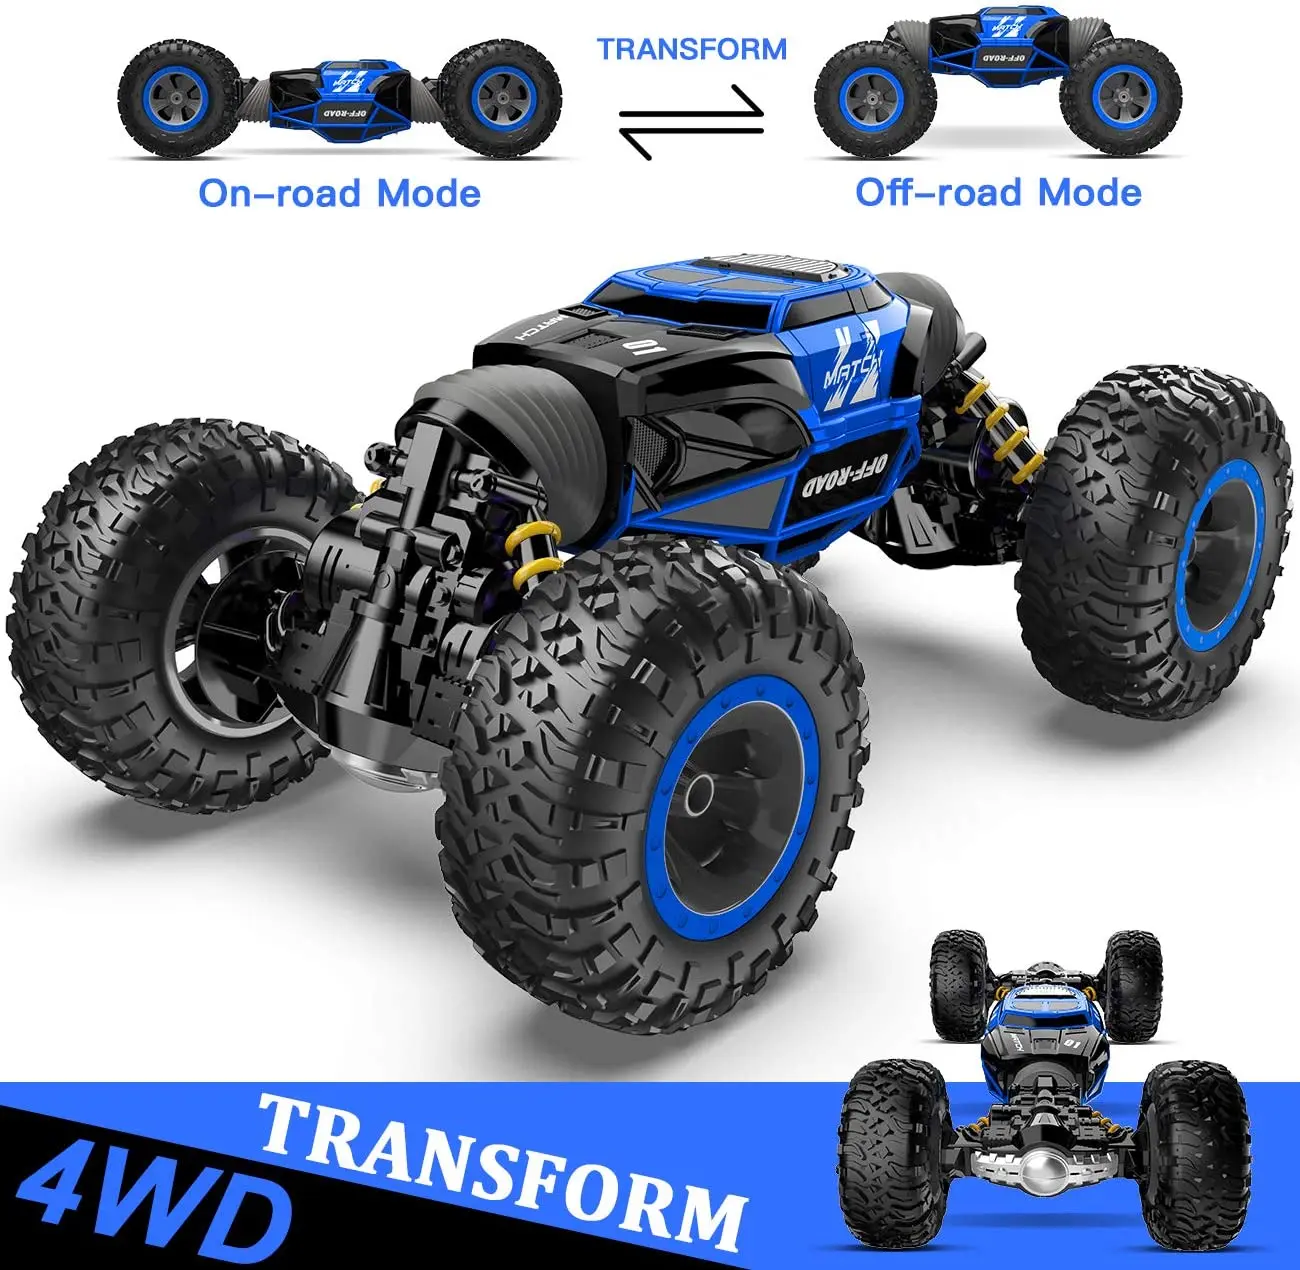 

BEZGAR 16 Toy Grade1:14 Scale Remote Control Crawler, 4WD Transform 15 Km/h All Terrains Electric qpopsitaToy Stunt Cars Monster